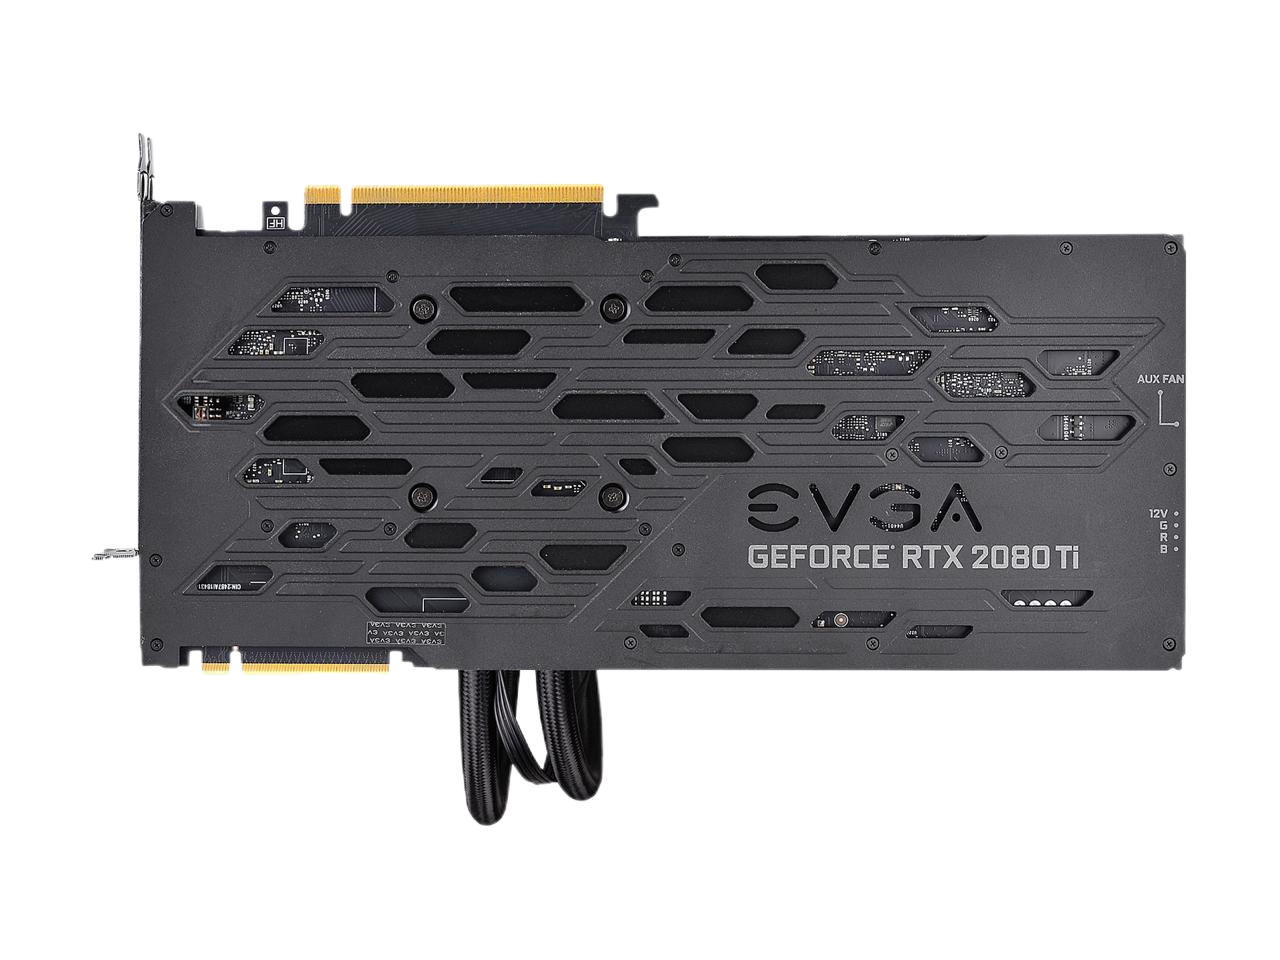 EVGA GeForce RTX 2080 TI FTW3 ULTRA HYBRID GAMING 11GB GDDR6 RGB LED & iCX2 Technology - 9 Thermal Sensors  Graphics Card 11G-P4-2484-KR